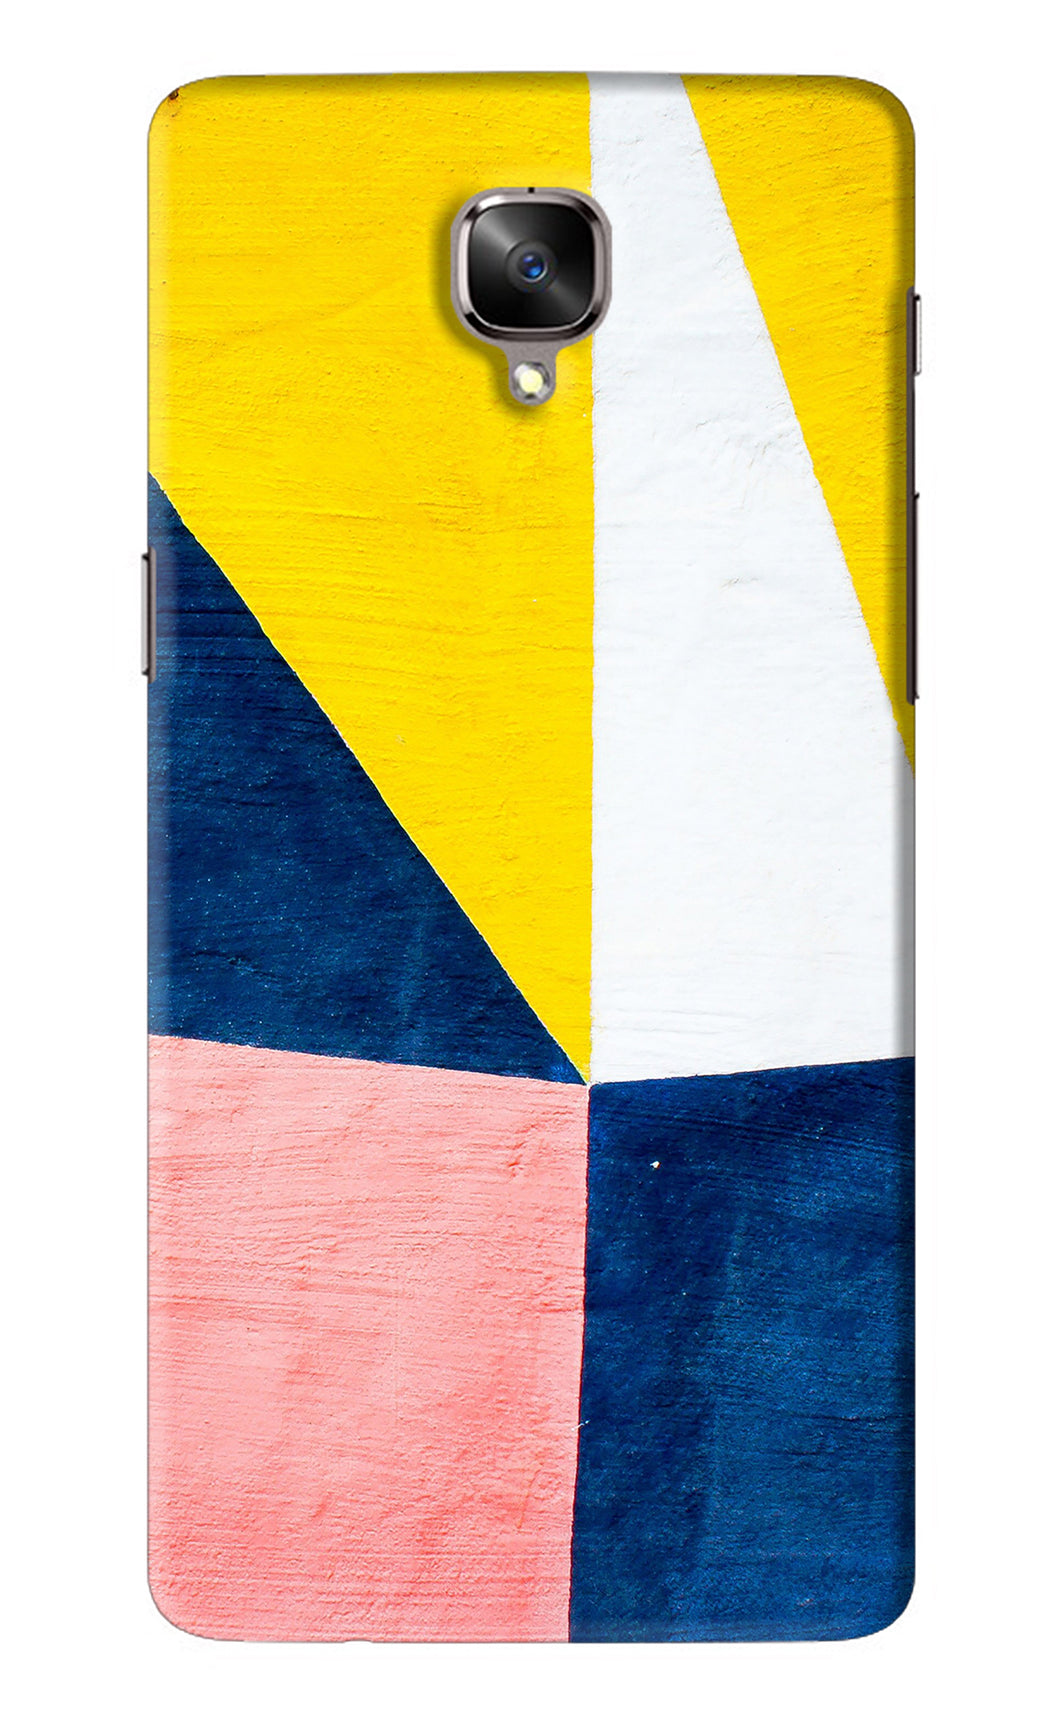 Colourful Art OnePlus 3 Back Skin Wrap